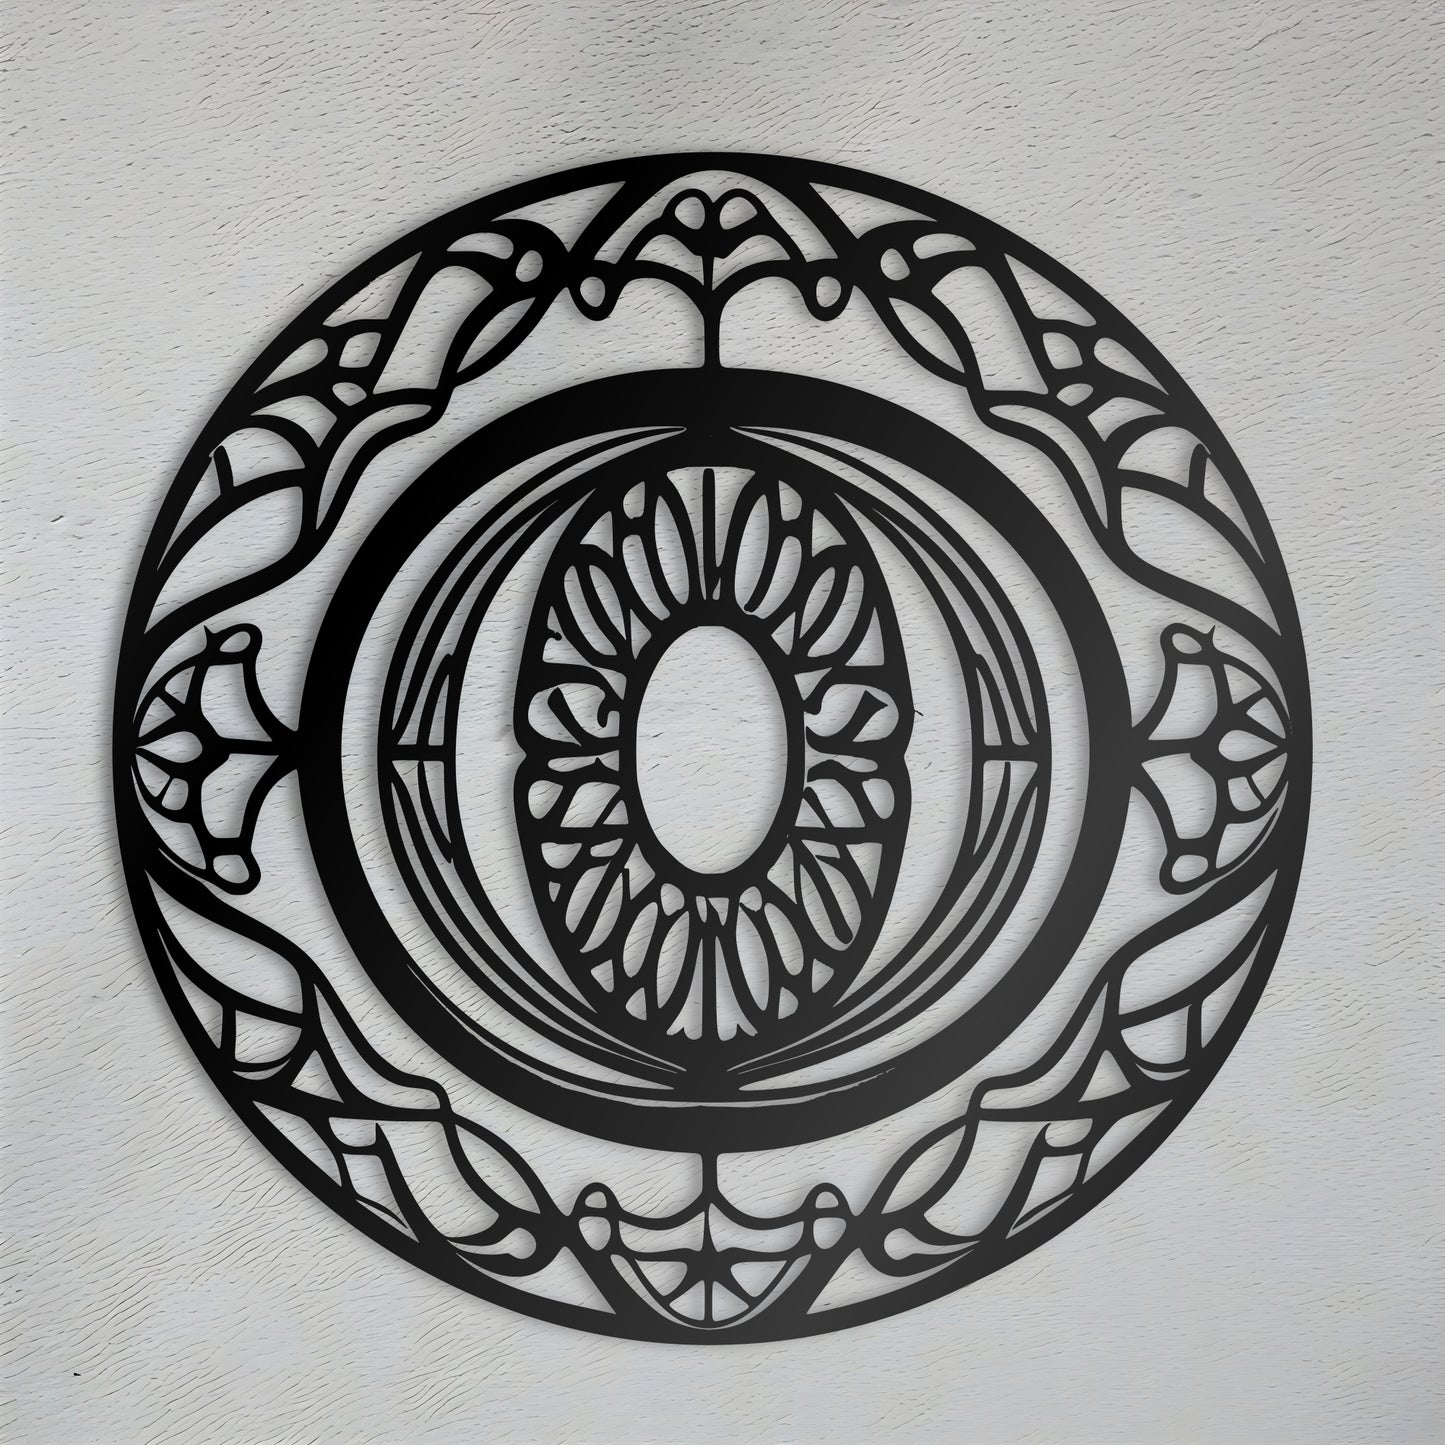 Intricate Mandala Ornament - Metal Wall Art